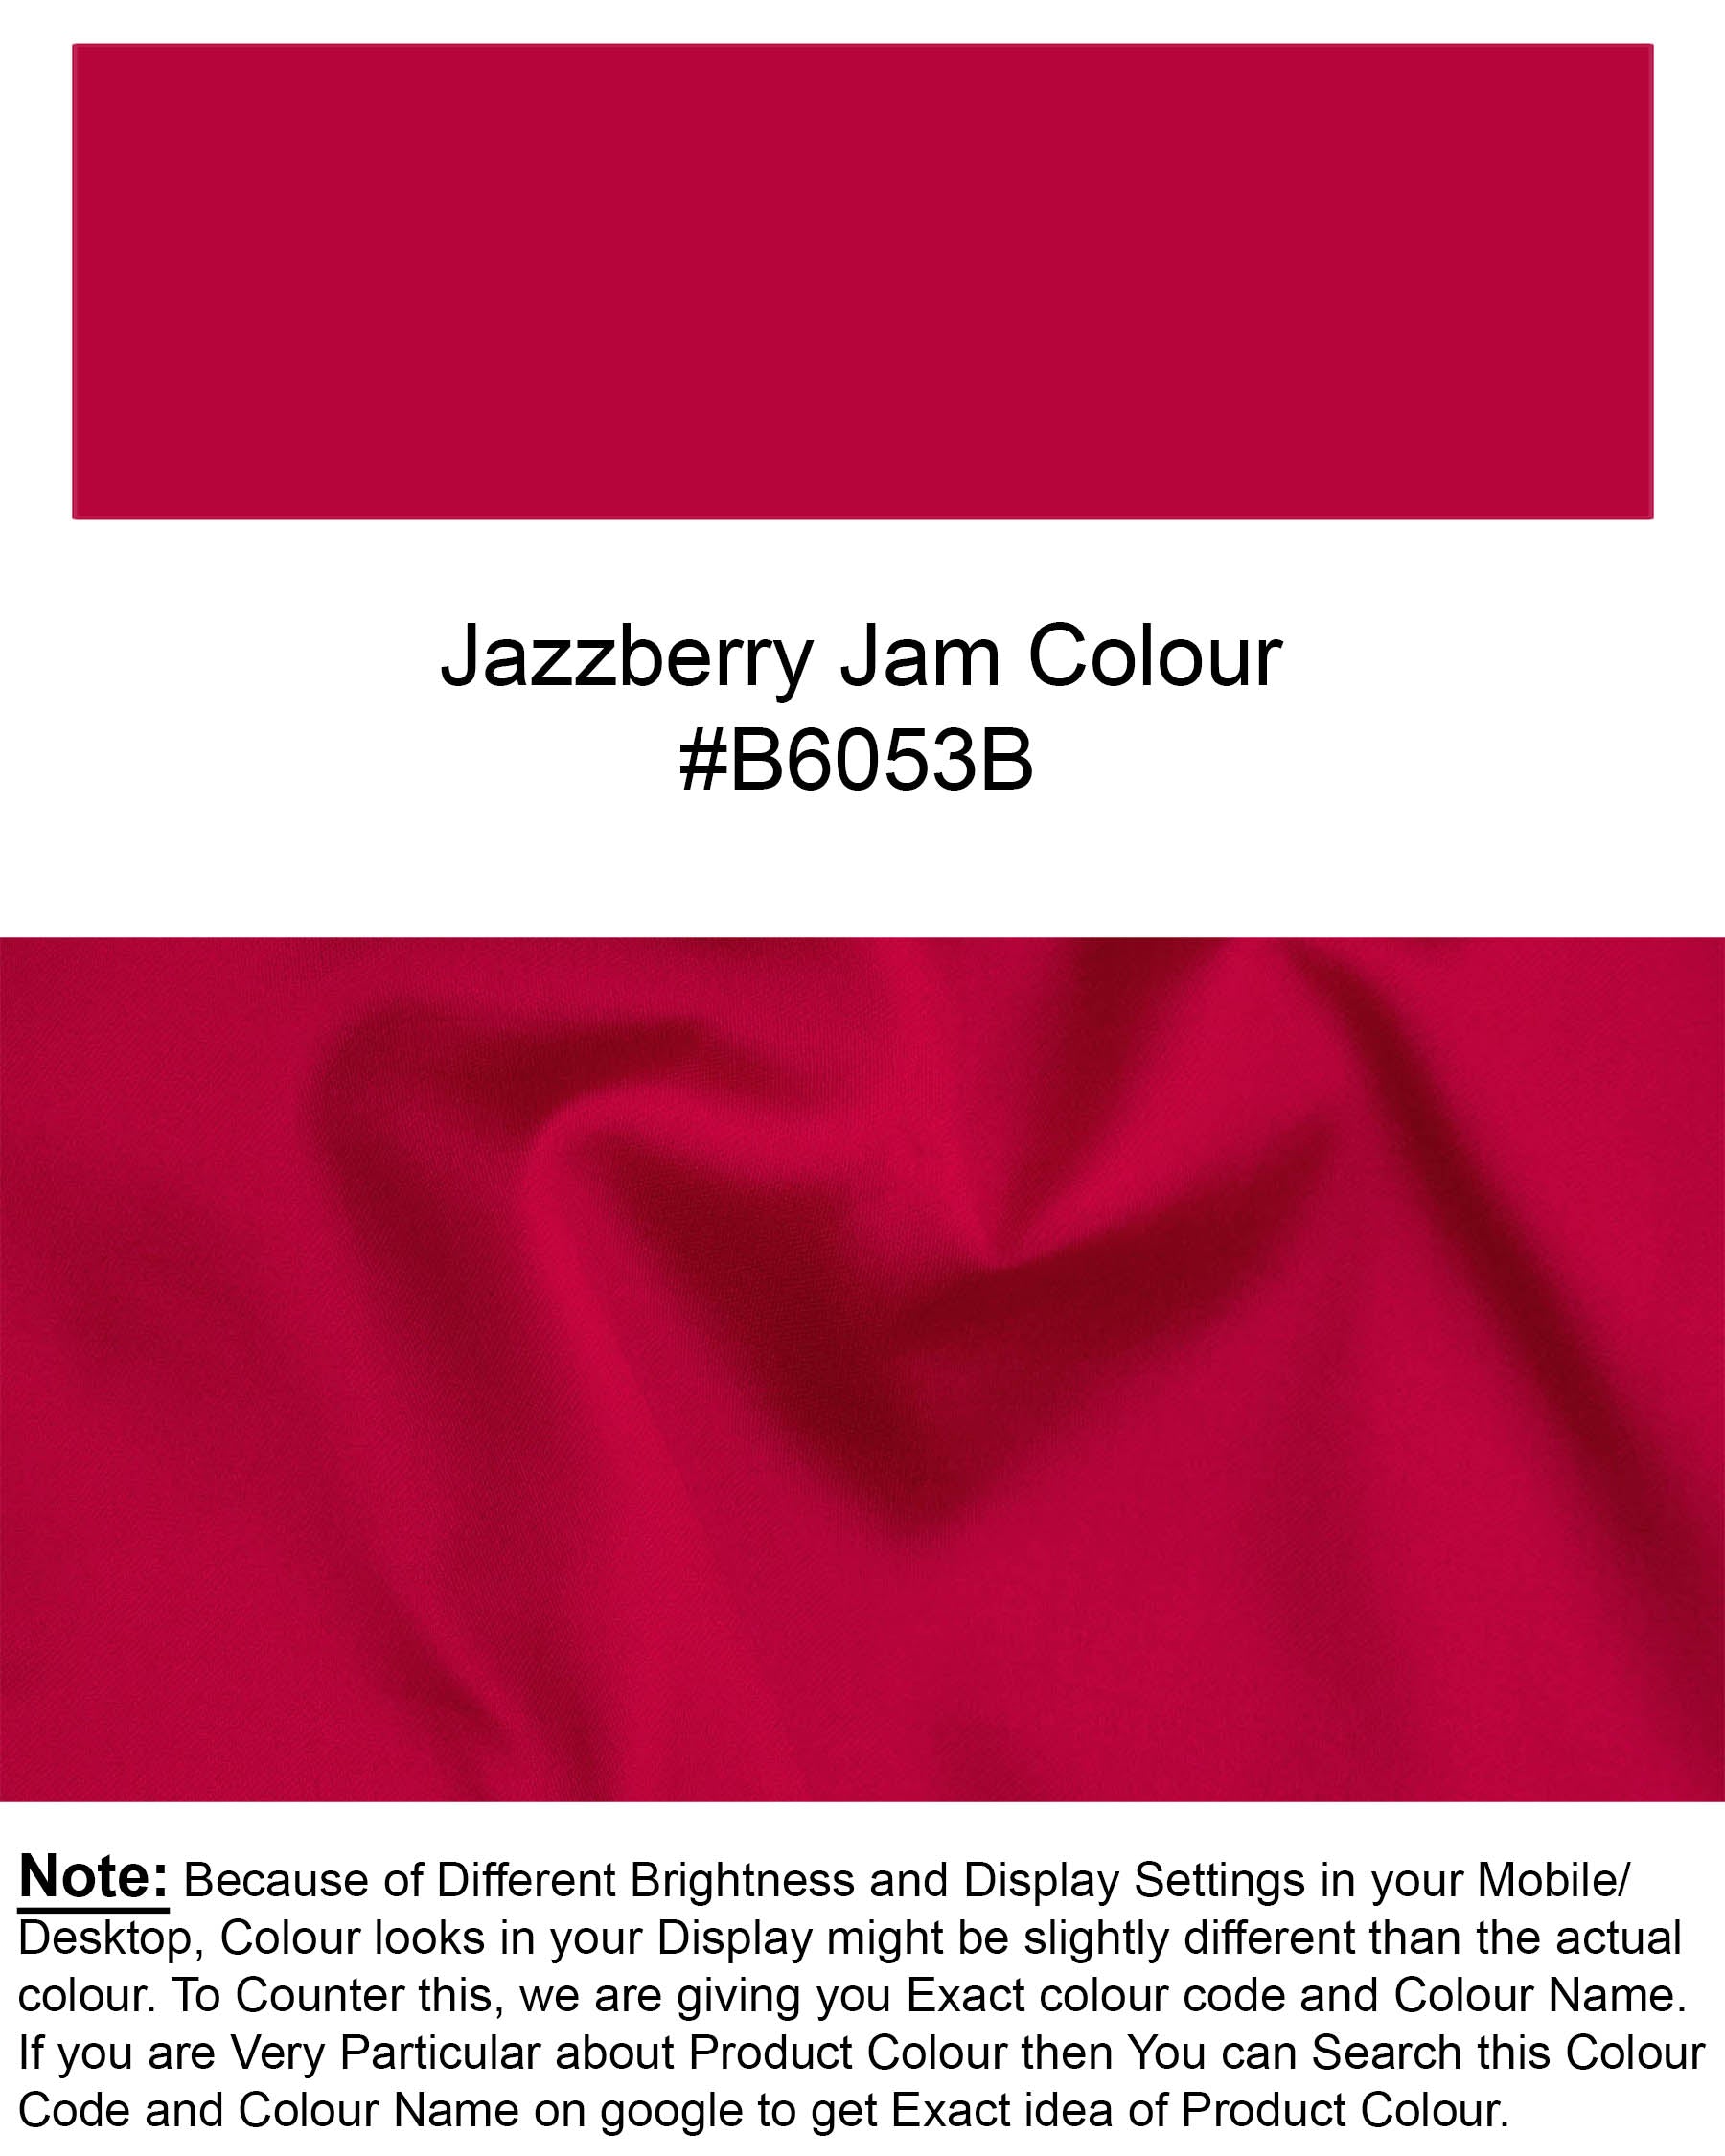 Jazzberry Jam Red Super Soft Premium Cotton Shirt 6211-BD-BLK-38, 6211-BD-BLK-H-38, 6211-BD-BLK-39, 6211-BD-BLK-H-39, 6211-BD-BLK-40, 6211-BD-BLK-H-40, 6211-BD-BLK-42, 6211-BD-BLK-H-42, 6211-BD-BLK-44, 6211-BD-BLK-H-44, 6211-BD-BLK-46, 6211-BD-BLK-H-46, 6211-BD-BLK-48, 6211-BD-BLK-H-48, 6211-BD-BLK-50, 6211-BD-BLK-H-50, 6211-BD-BLK-52, 6211-BD-BLK-H-52